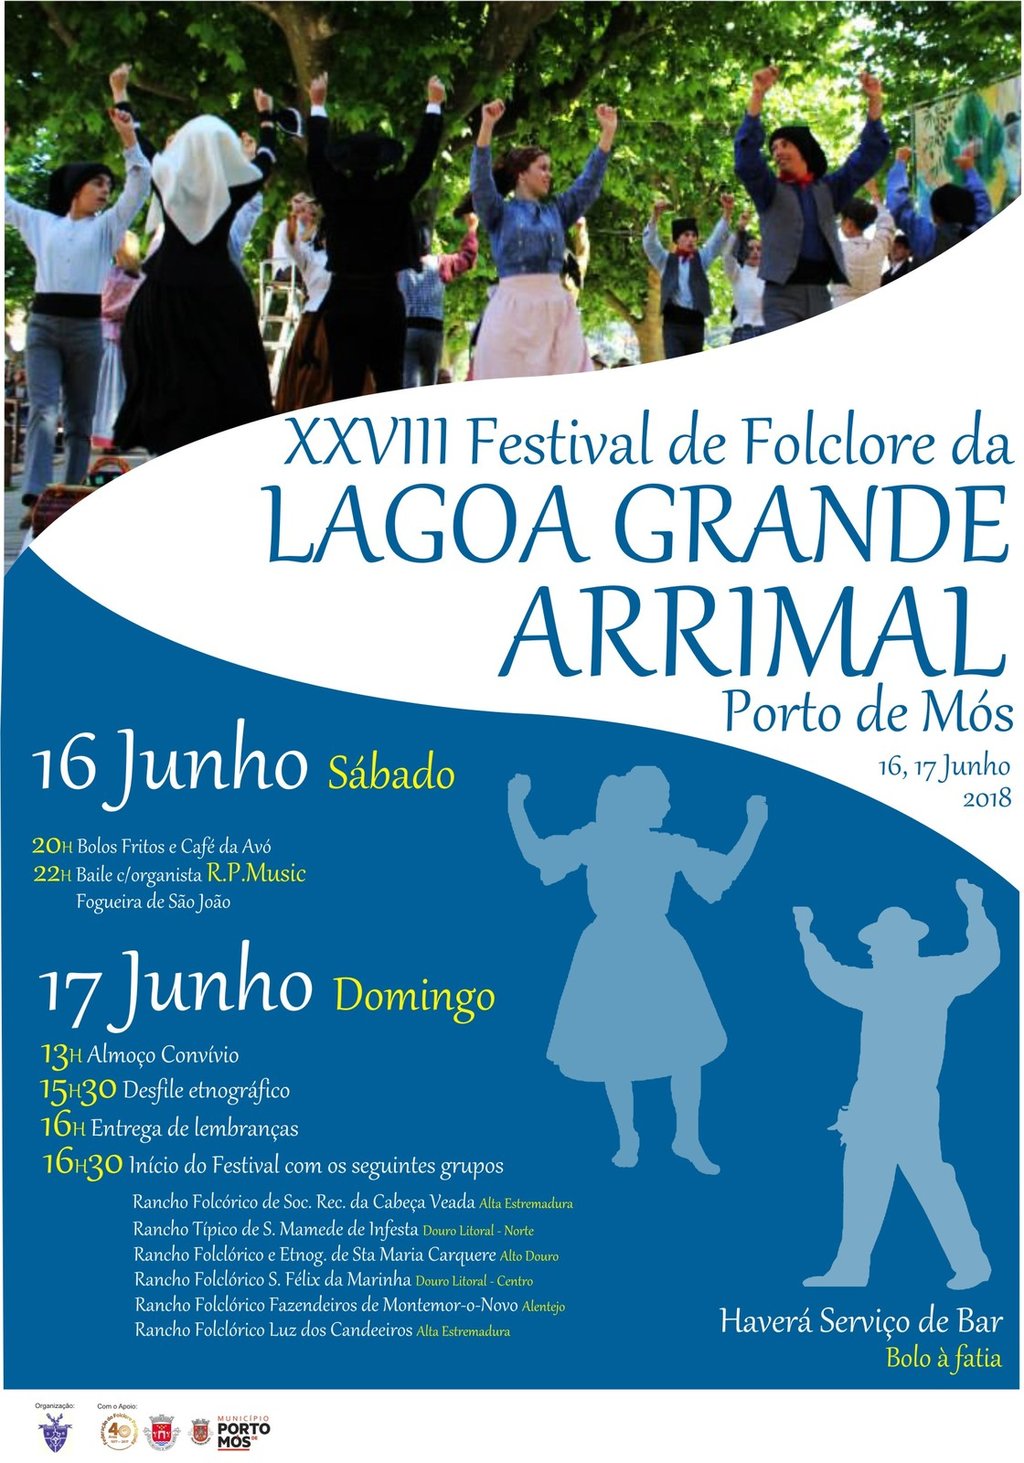 XXVIII Festival de Folclore da Lagoa Grande